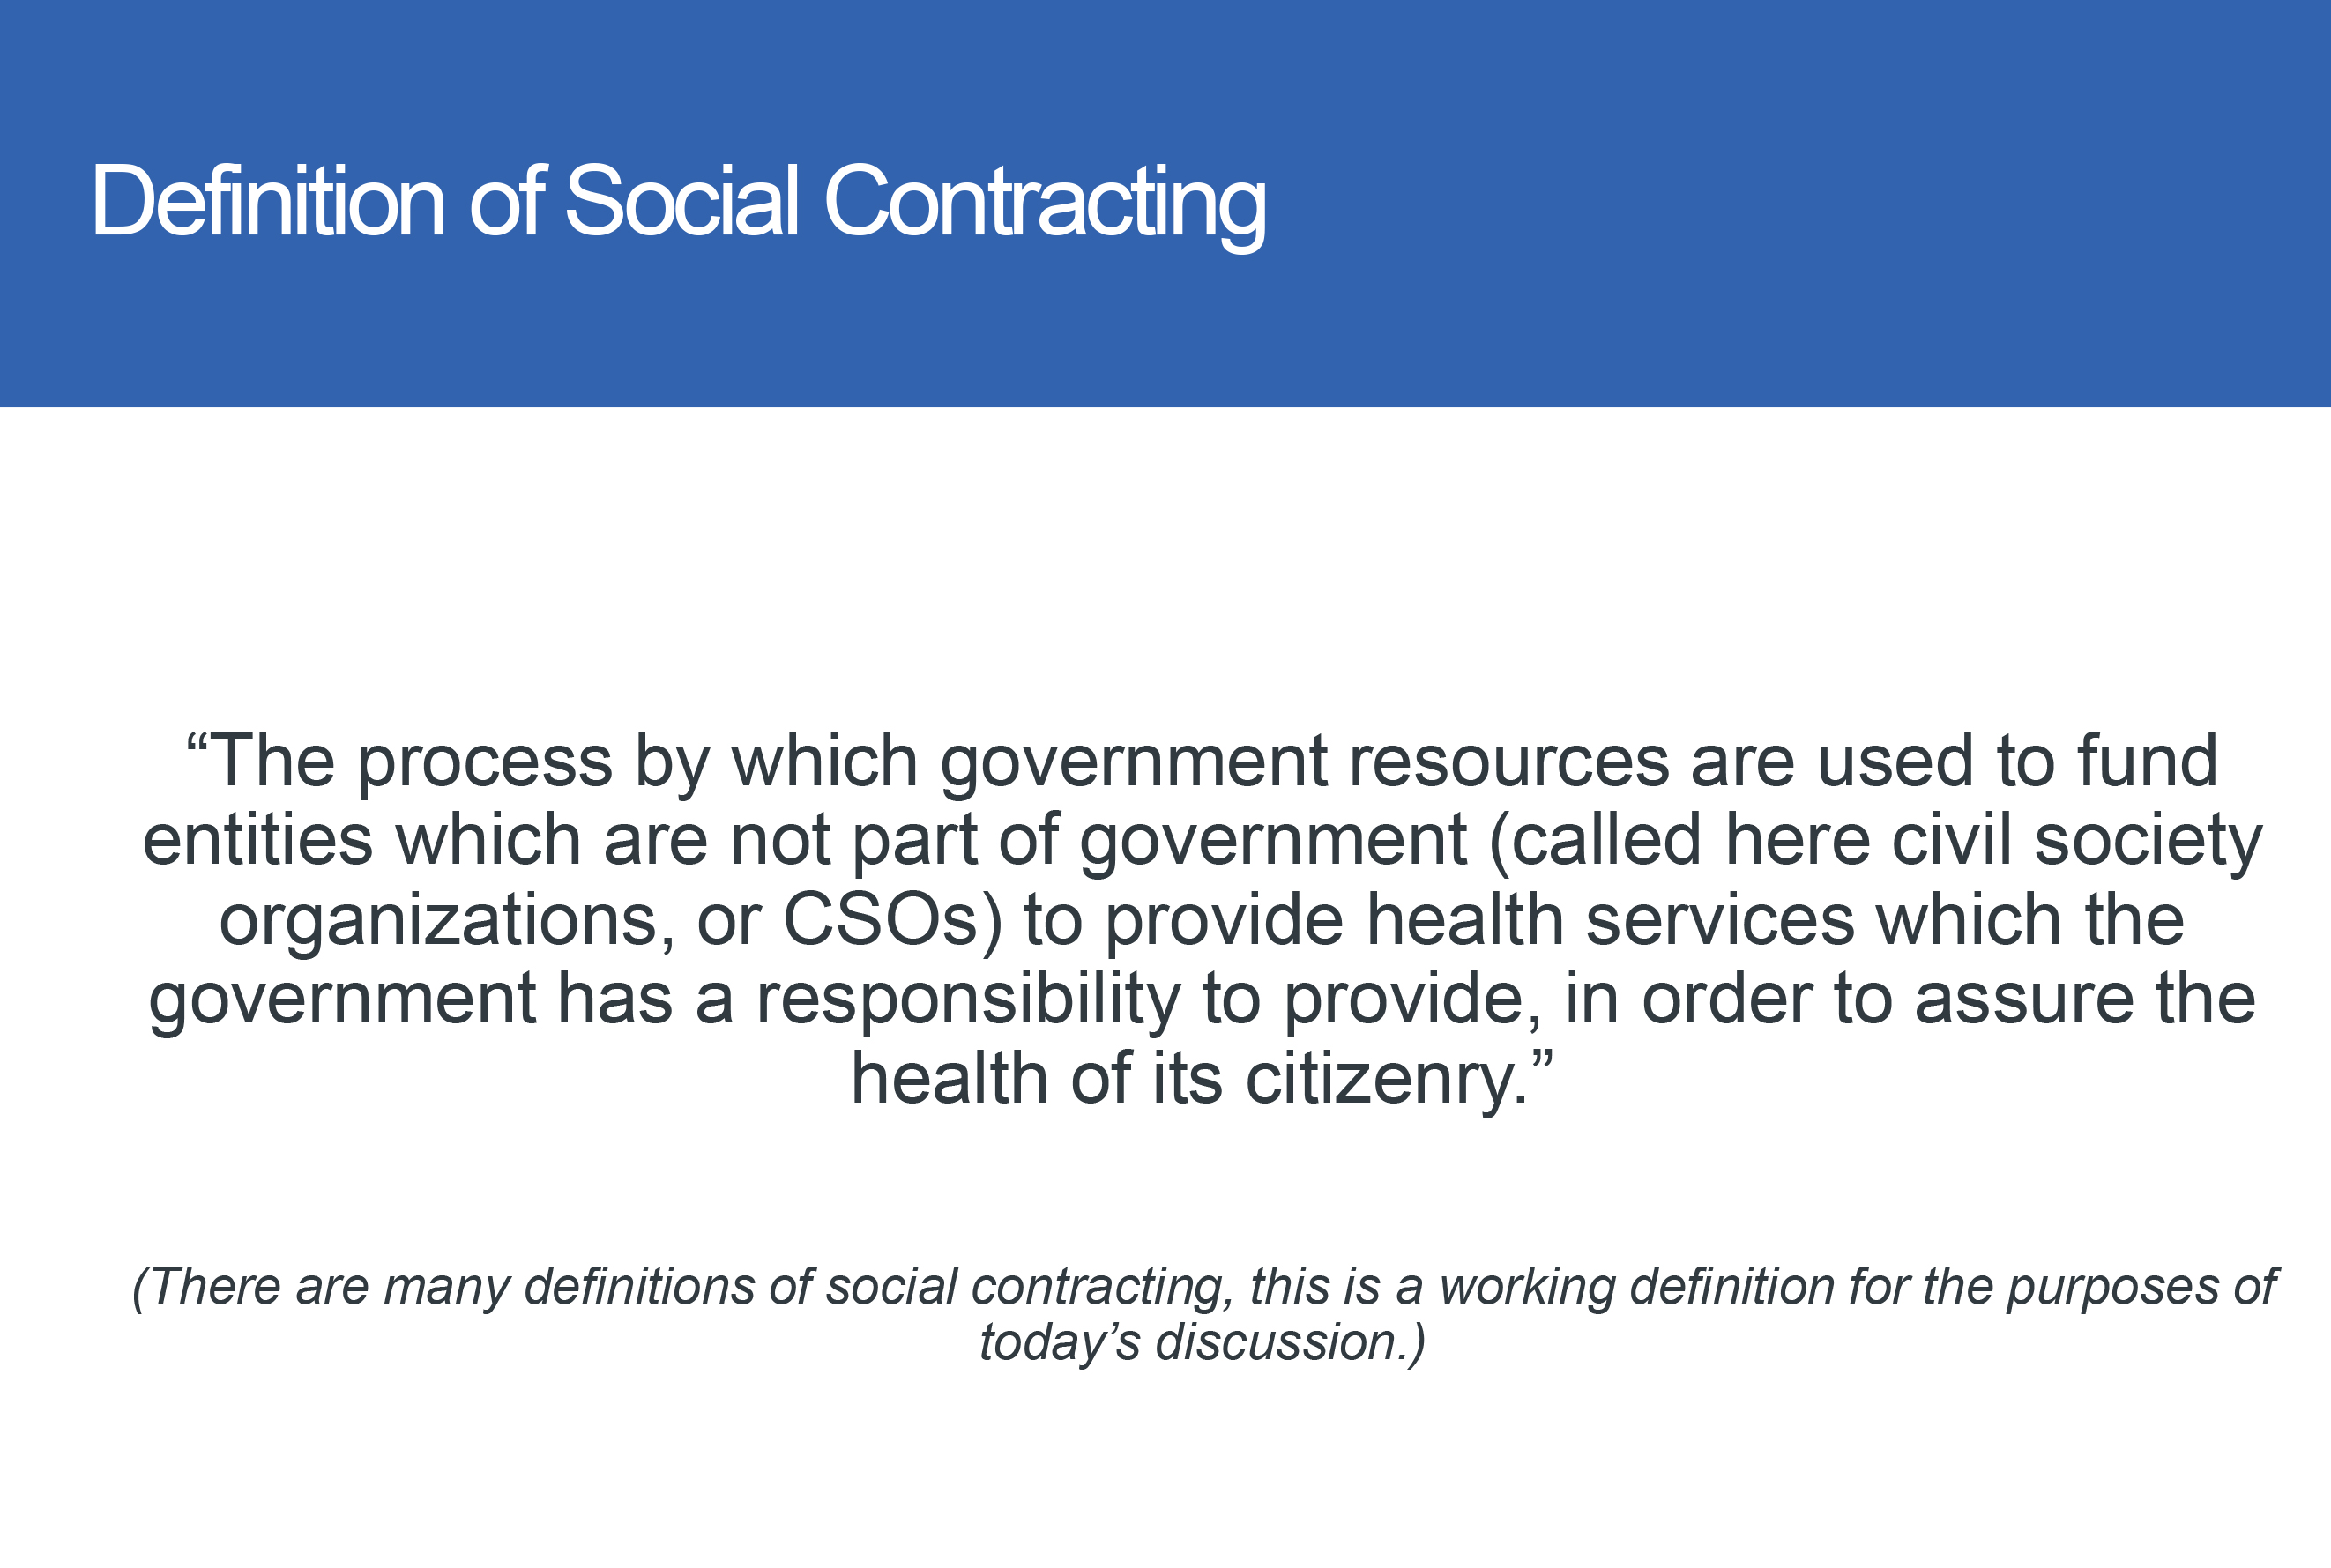 An interesting webinar on social contracting